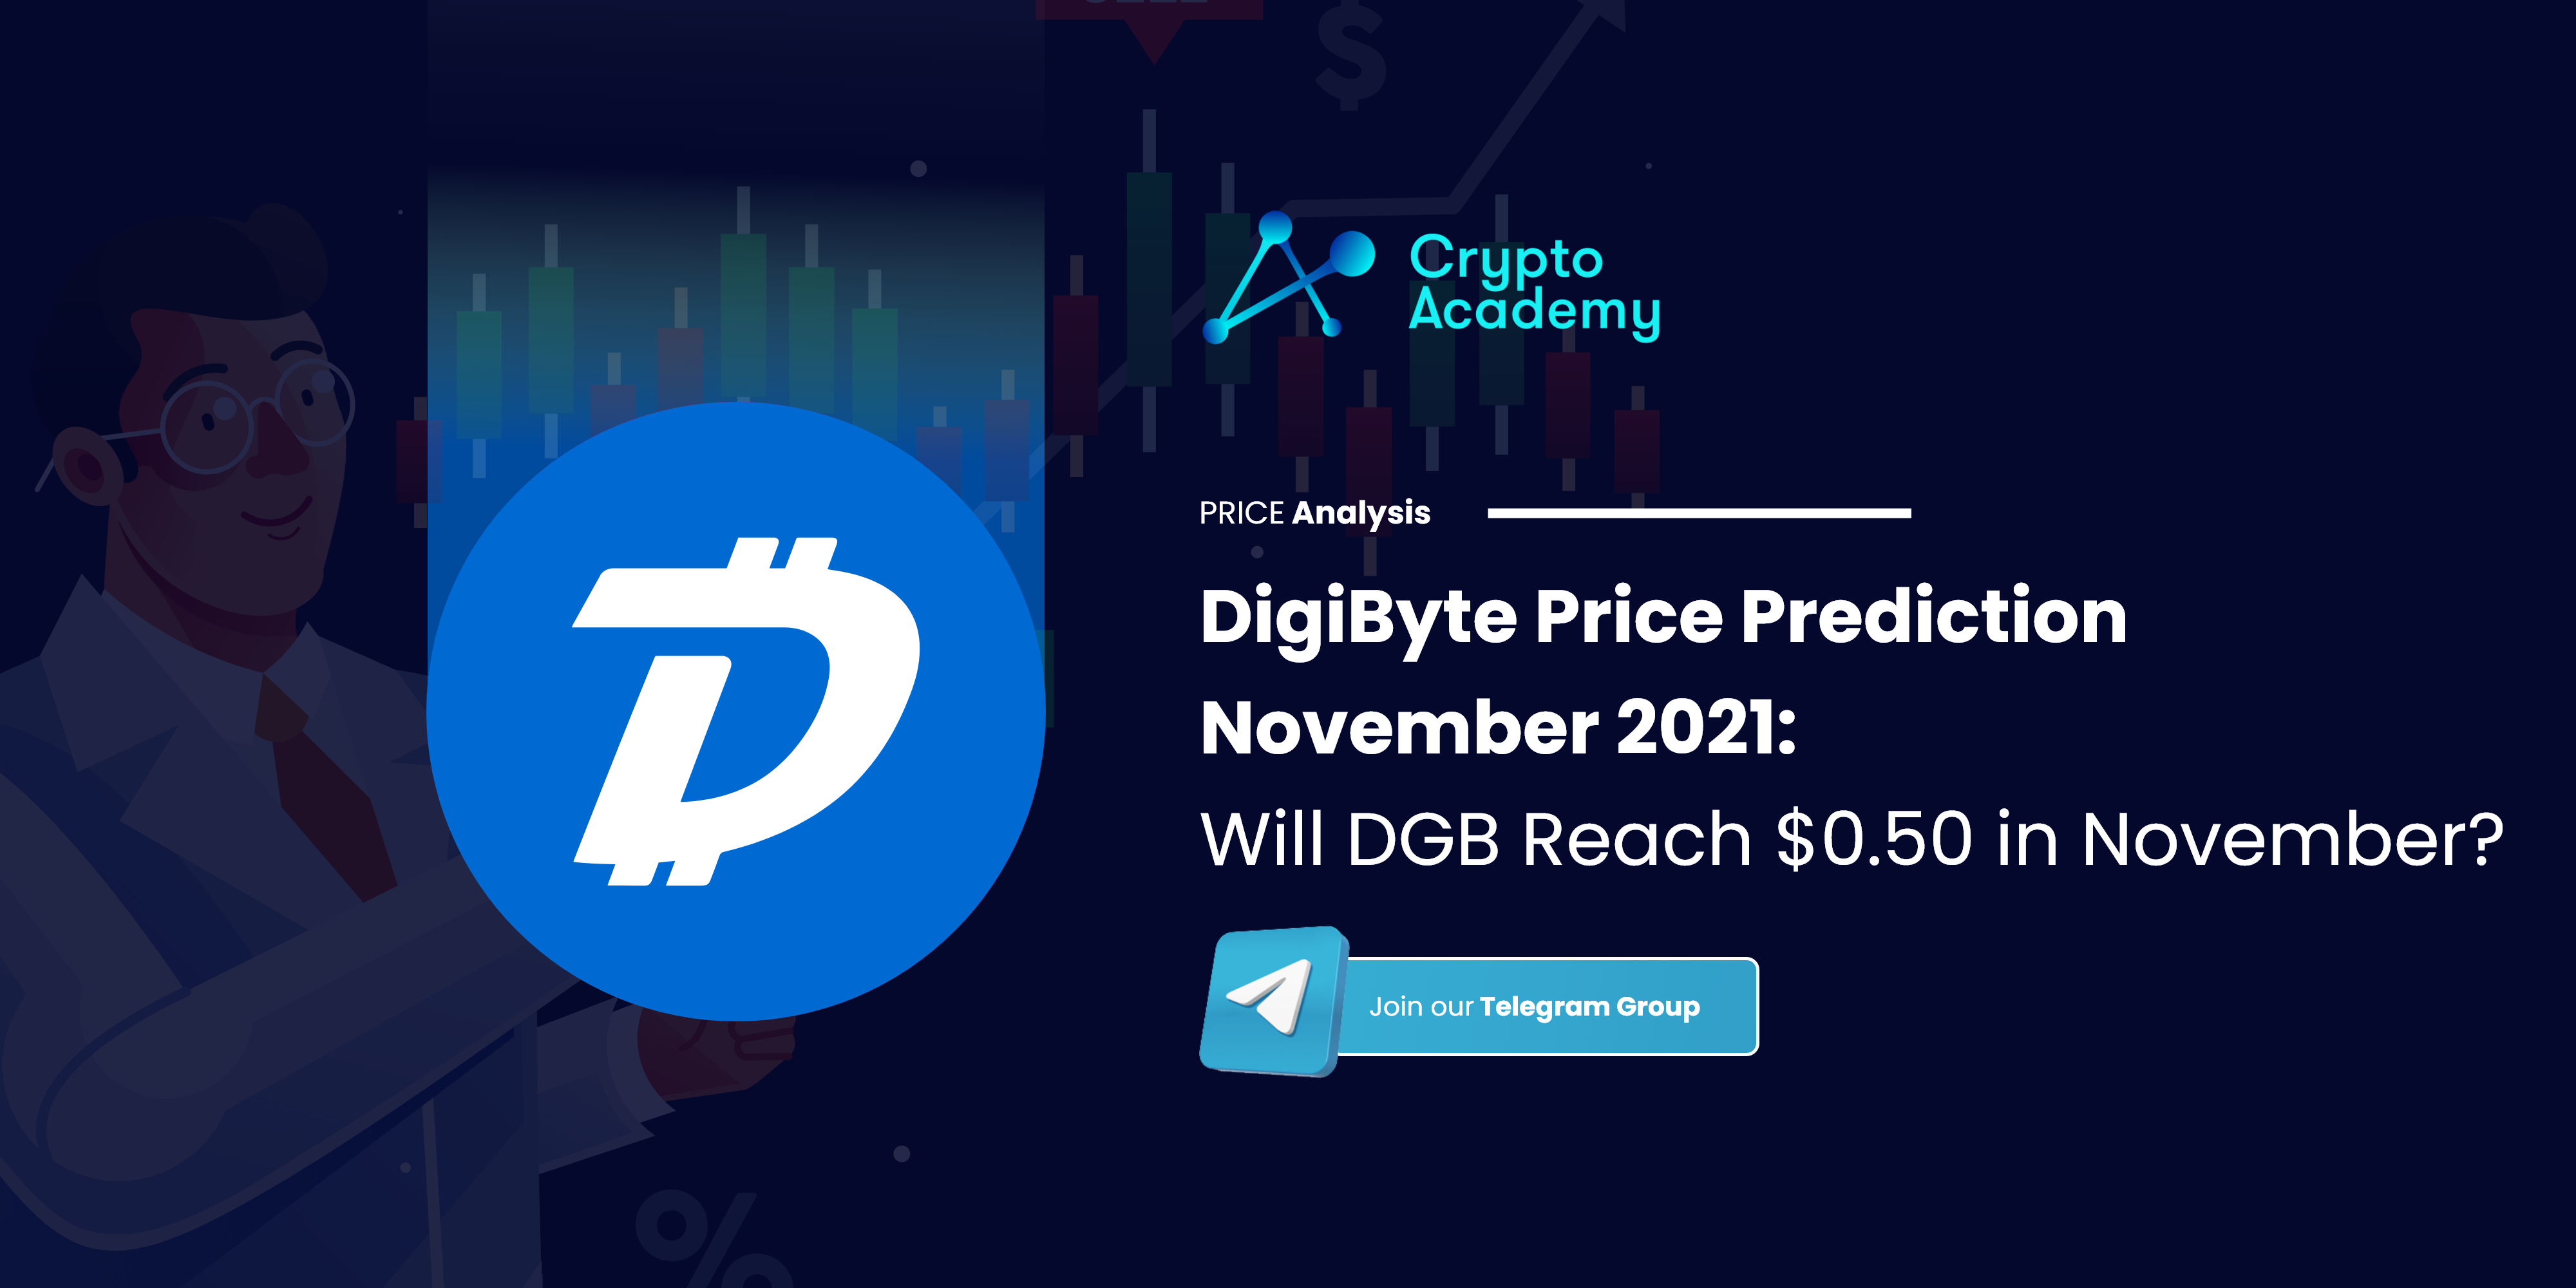 DigiByte Price Prediction November 2021: Will DGB Reach $0.50 in November?